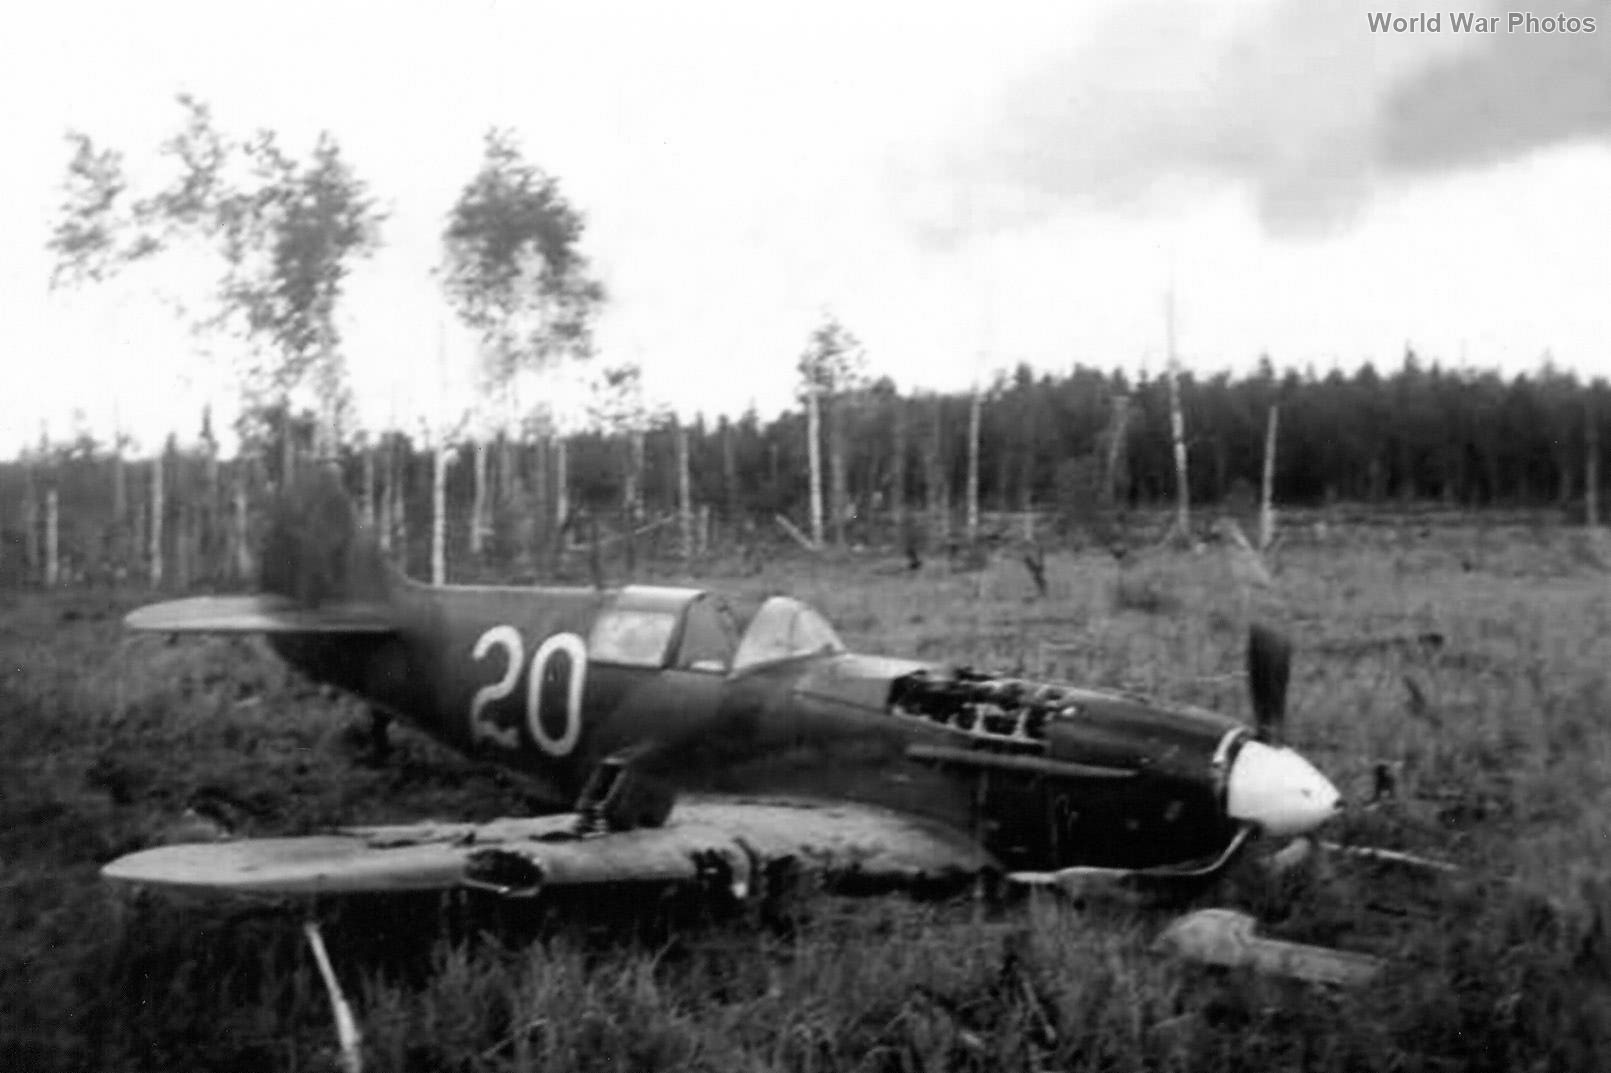 LaGG-3 20 1941